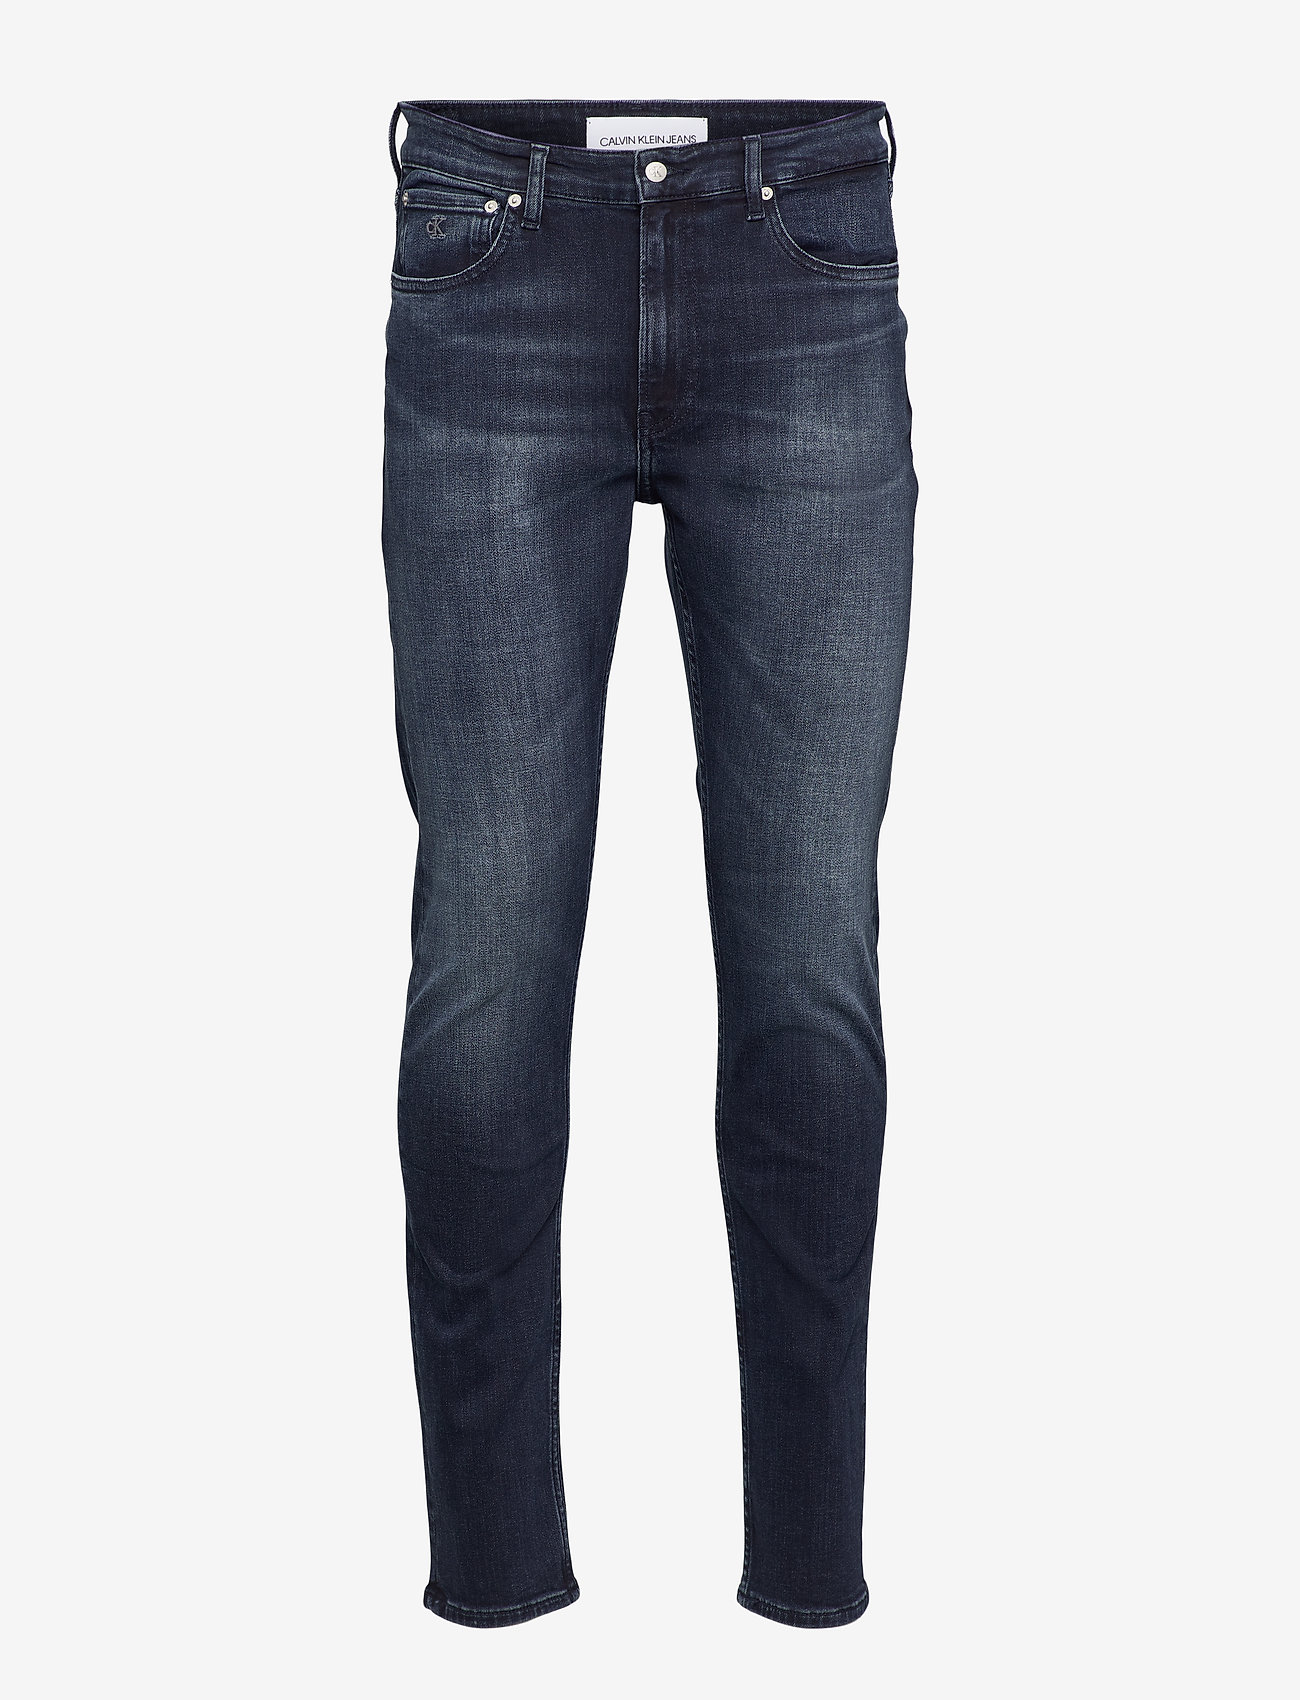 Calvin Klein Jeans - SLIM TAPER - slim fit jeans - denim dark - 0